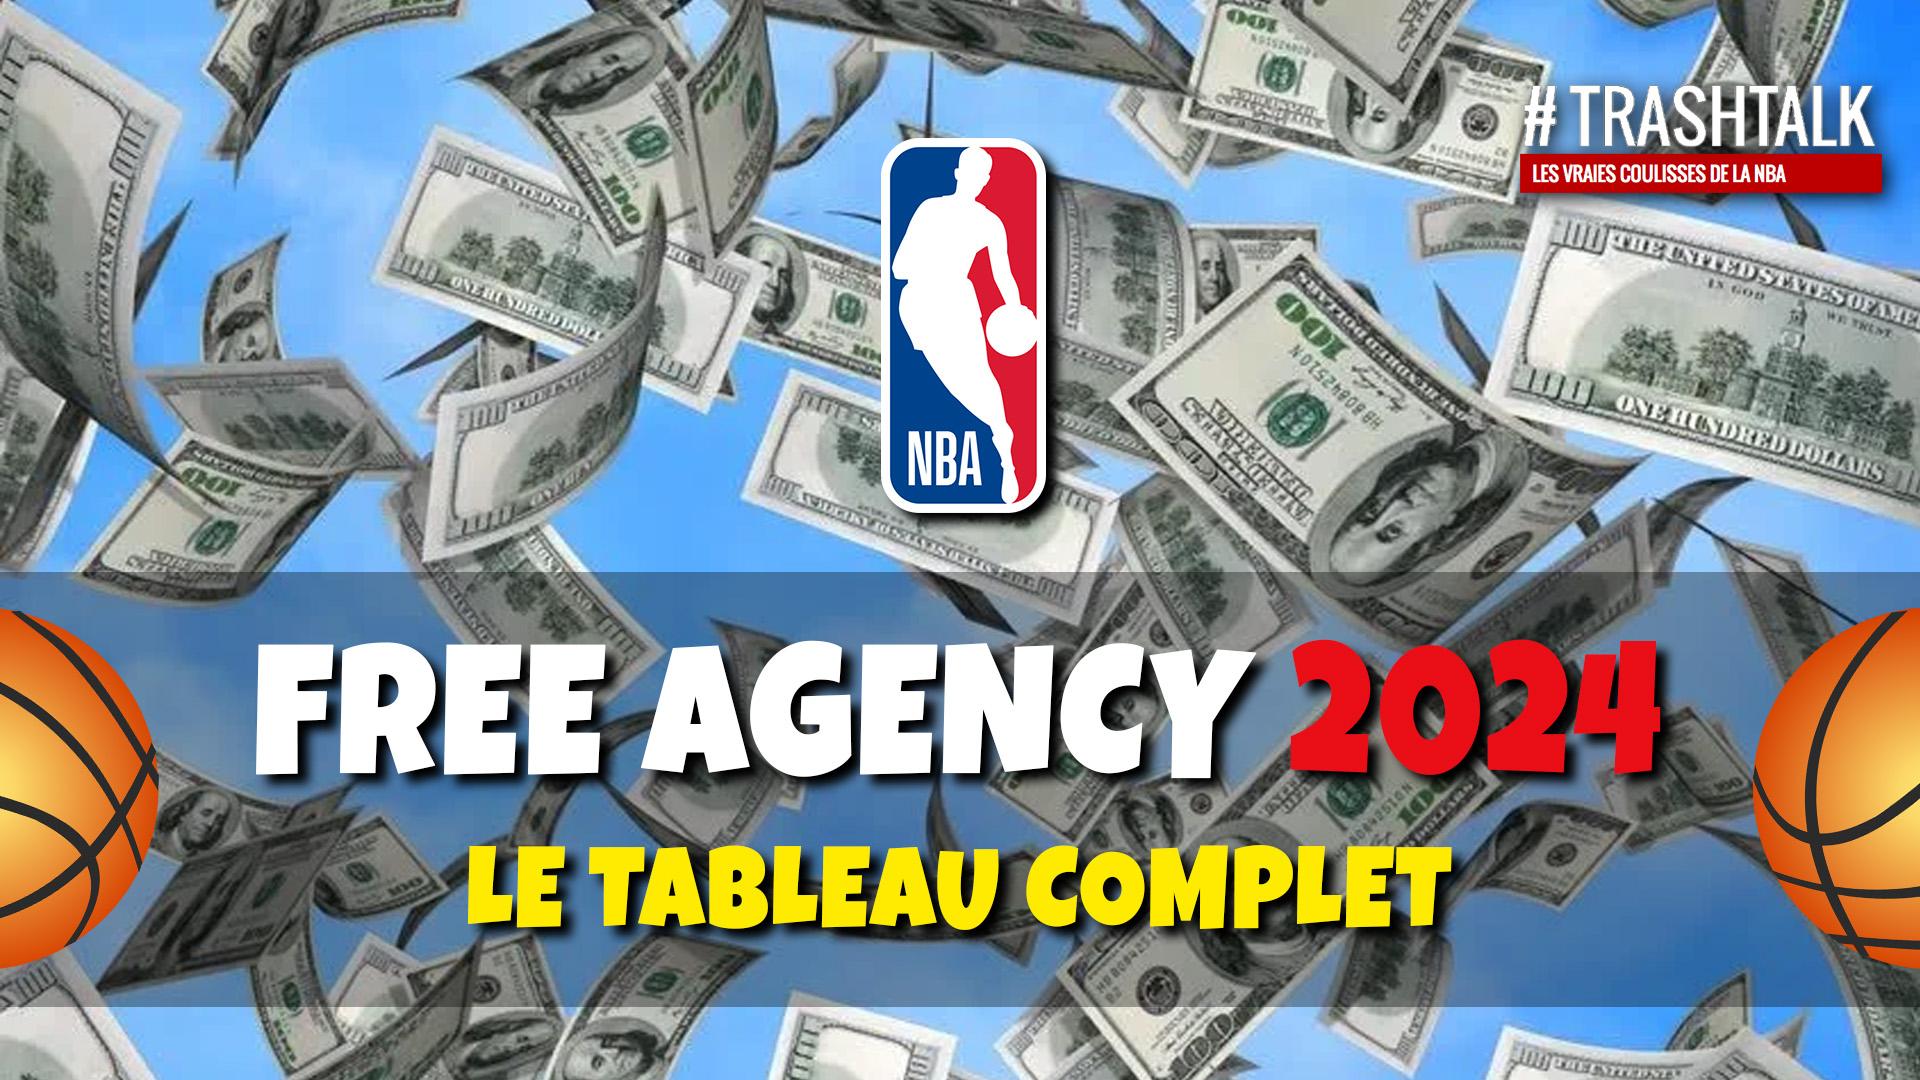 NBA Free Agency 2024 Tableau Complet TrashTalk 21 juin 2024